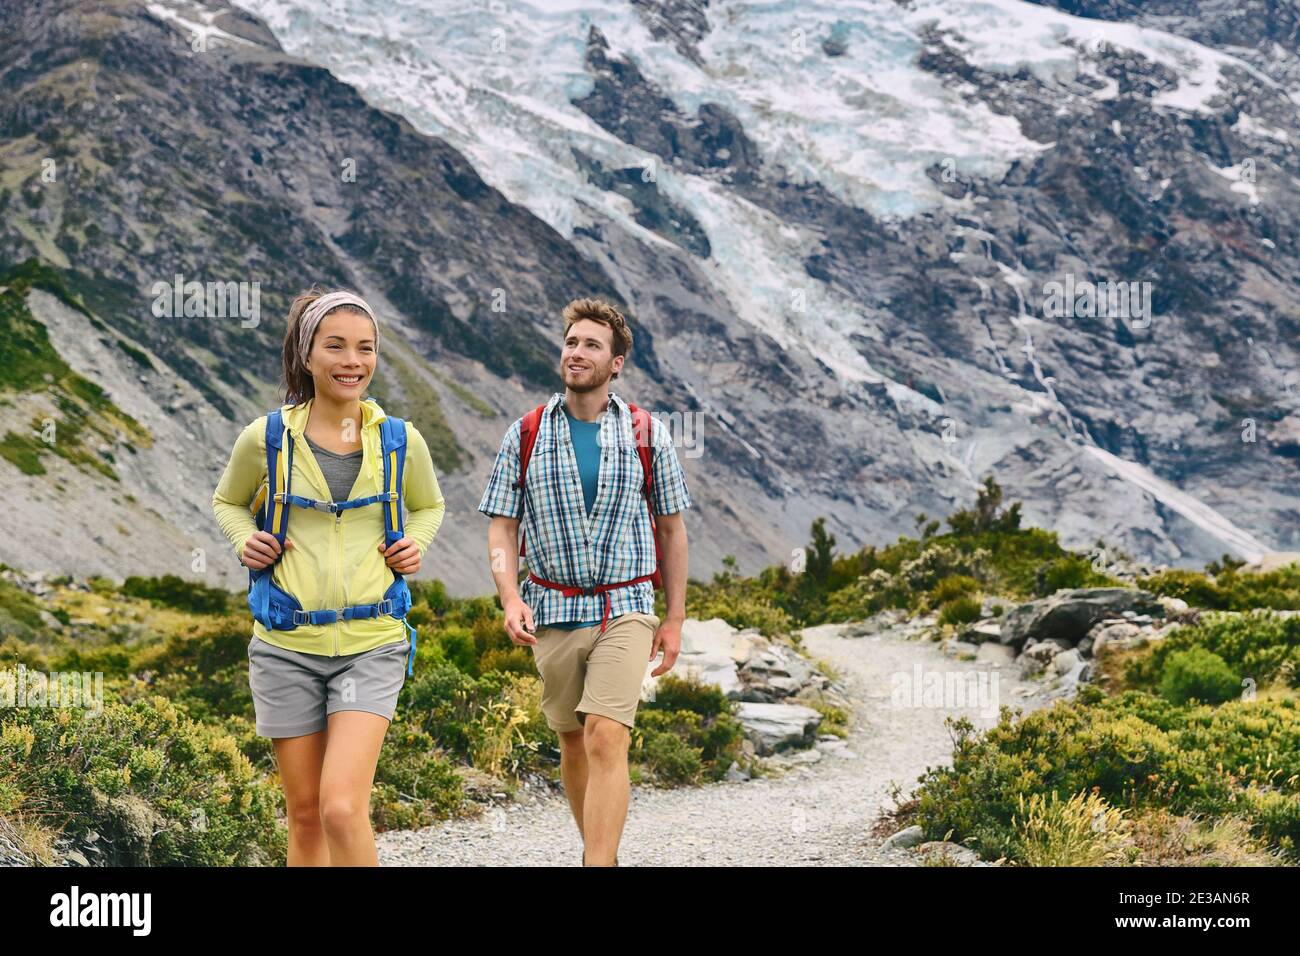 Wandern Reisen Wanderer Menschen Trampen in Neuseeland Berge Naturlehrpfad. Rucksacktouristen Paar auf Mount Cook / Aoraki Hooker Valley Track Rucksacktouristen Stockfoto